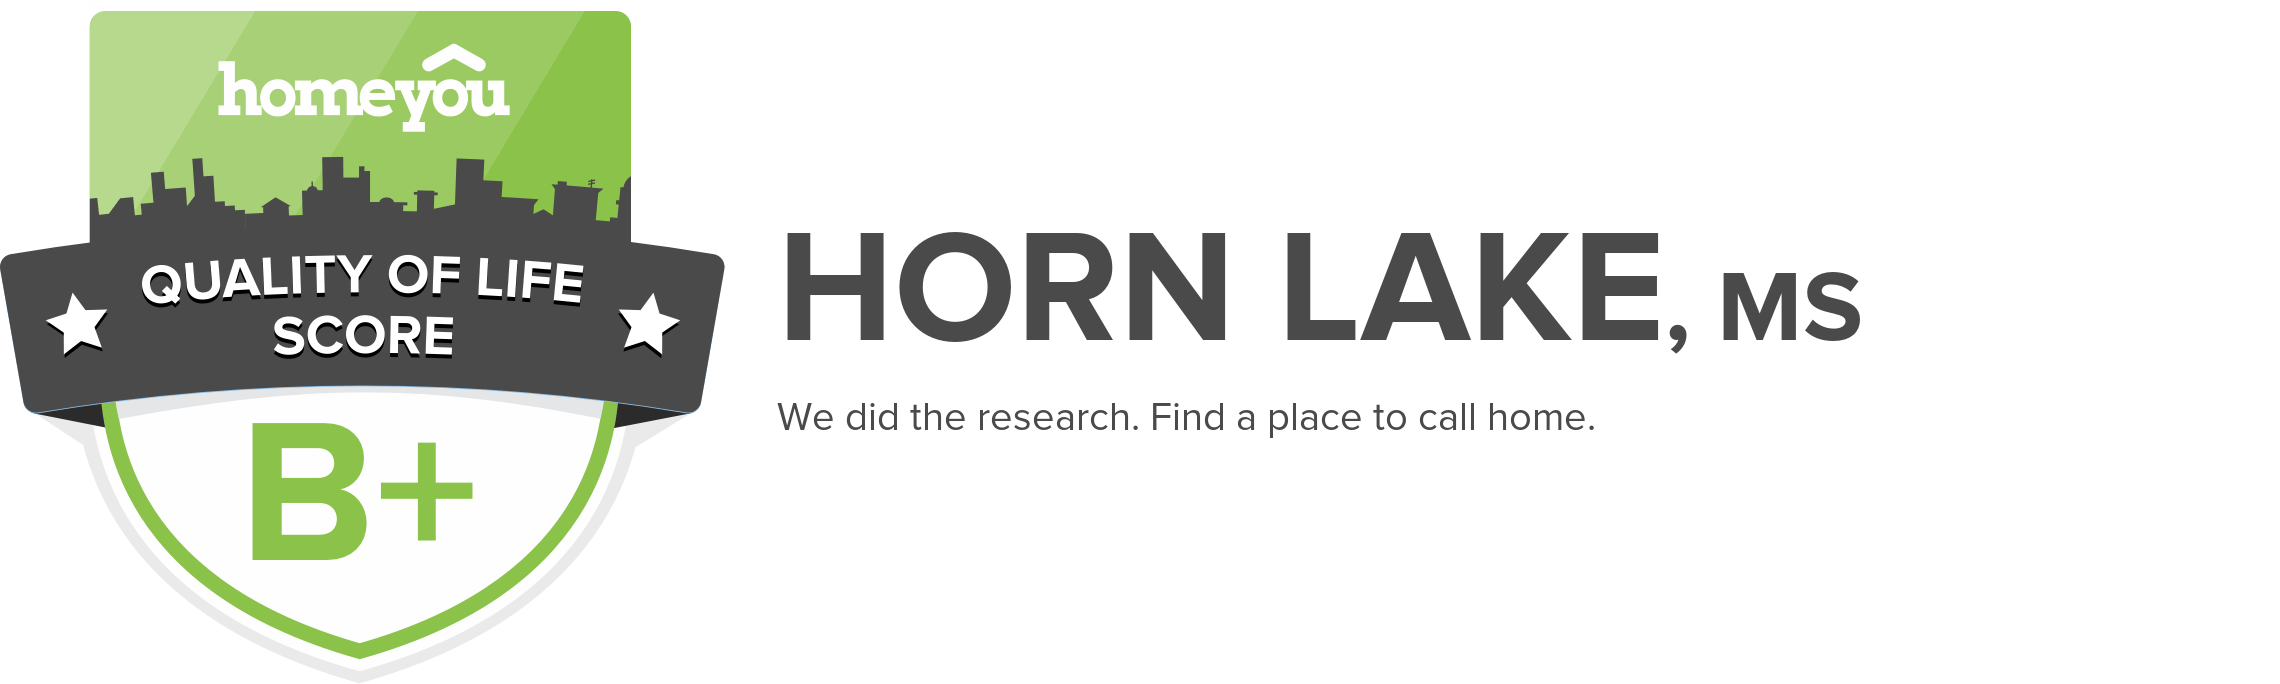 Horn Lake, MS